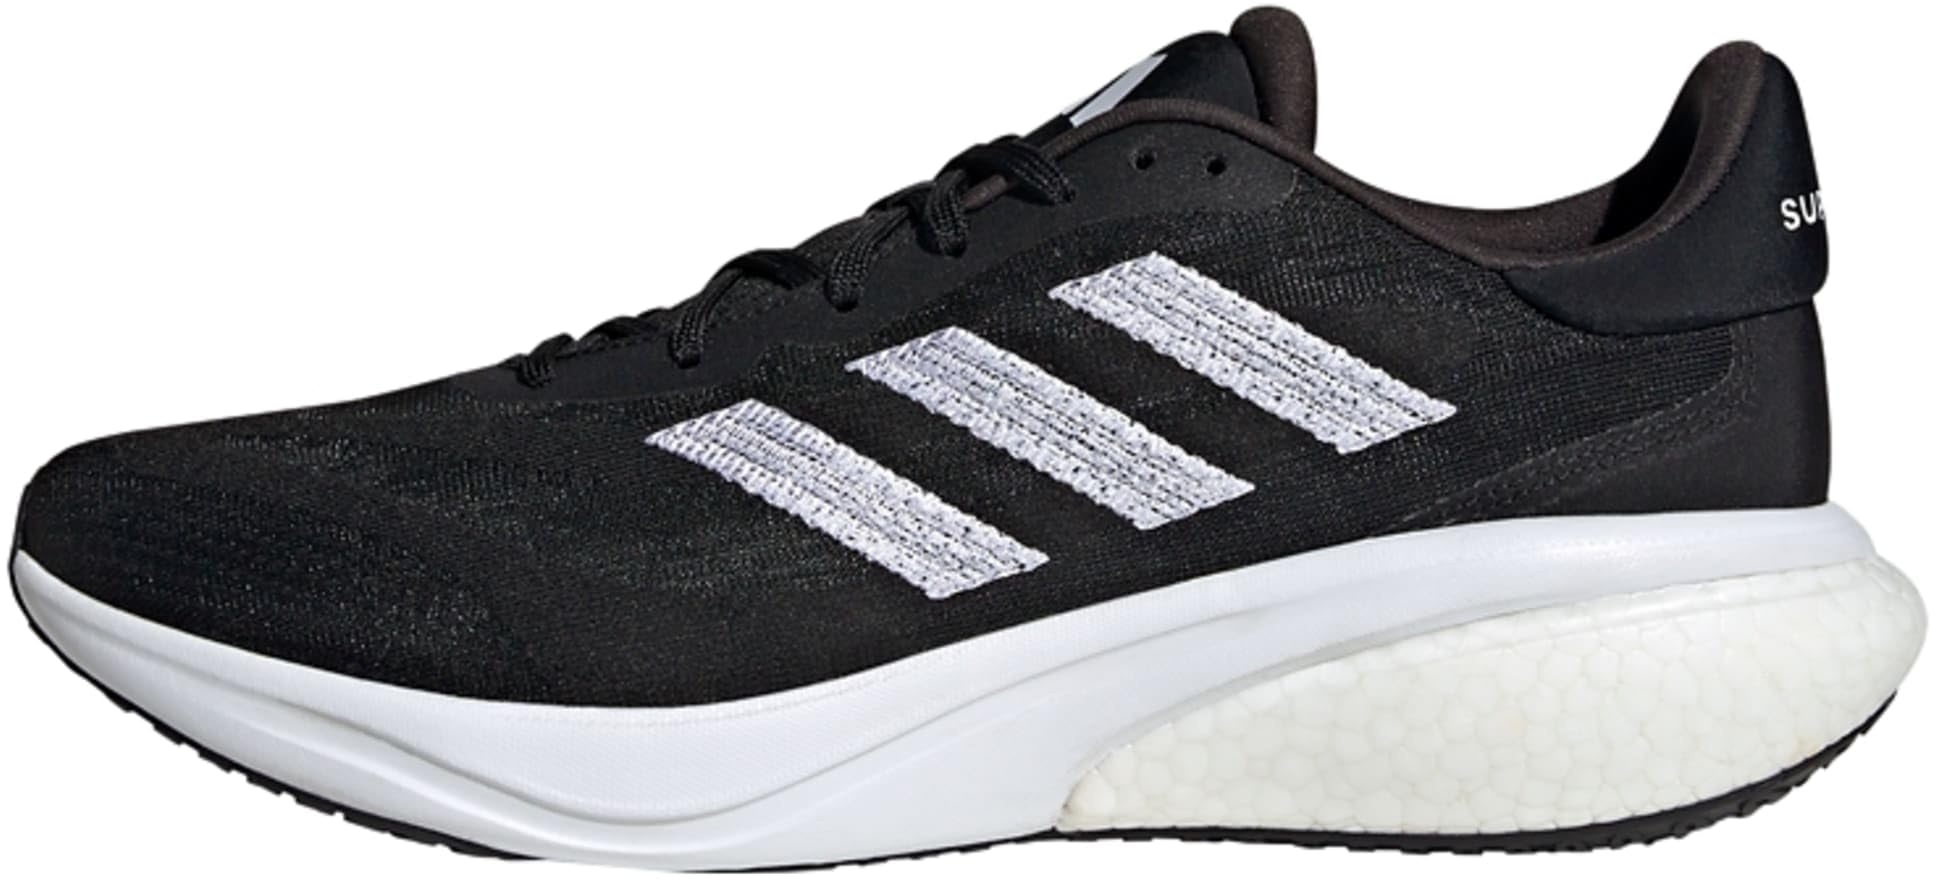 adidas Herren Supernova 3 Running Shoes Laufschuhe, core Black/FTWR White/core Black, 46 EU